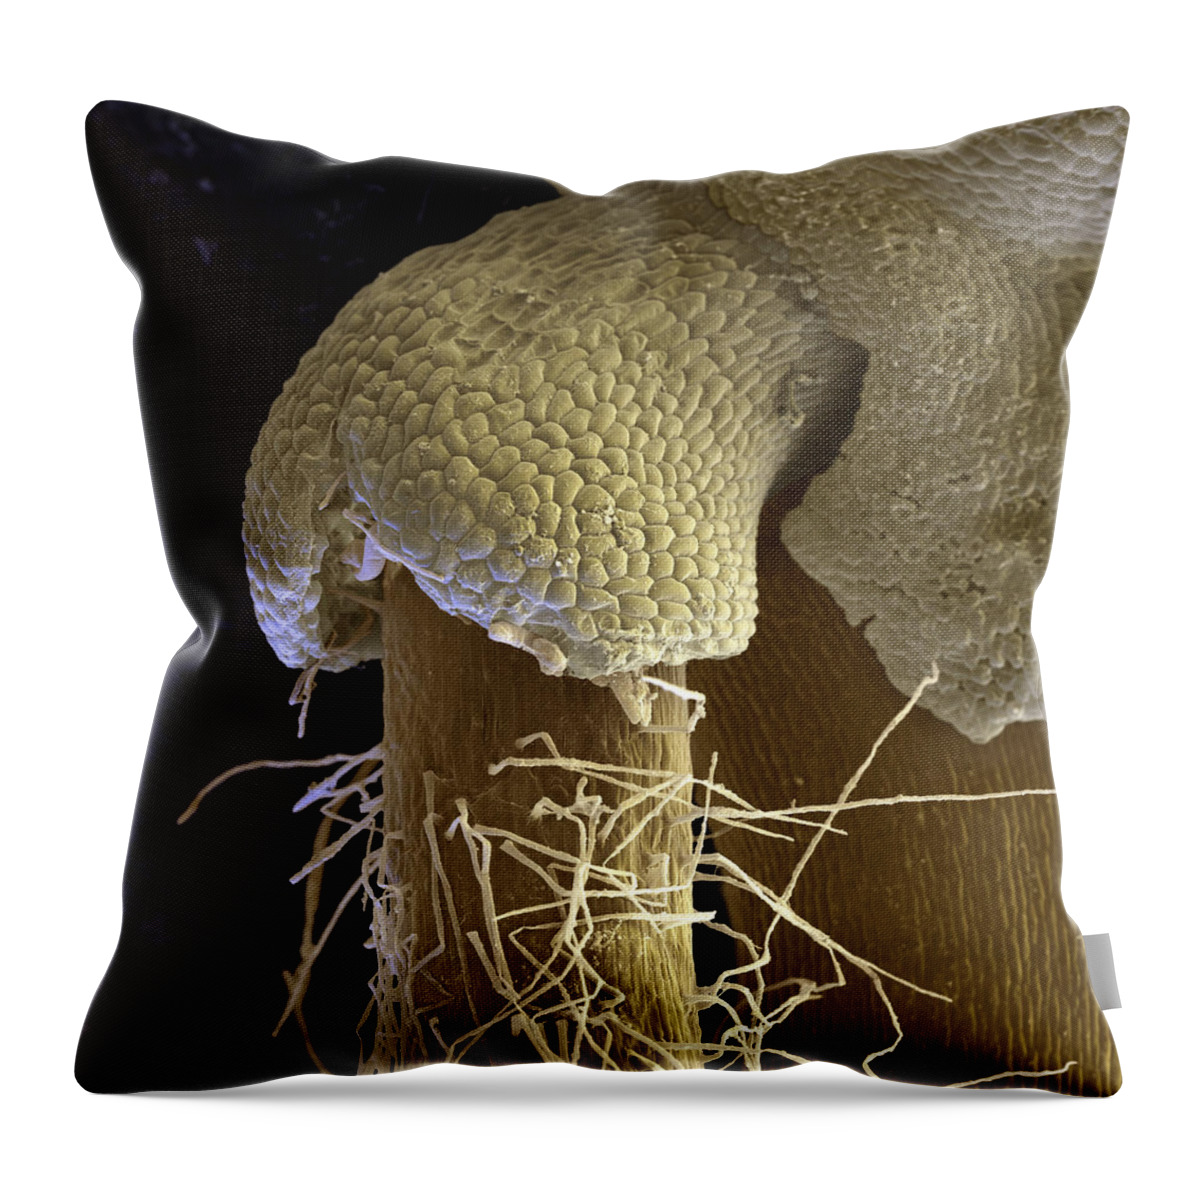 Bread Ingredient Throw Pillow featuring the photograph Wheat Triticum Aestivum L by Meckes/ottawa